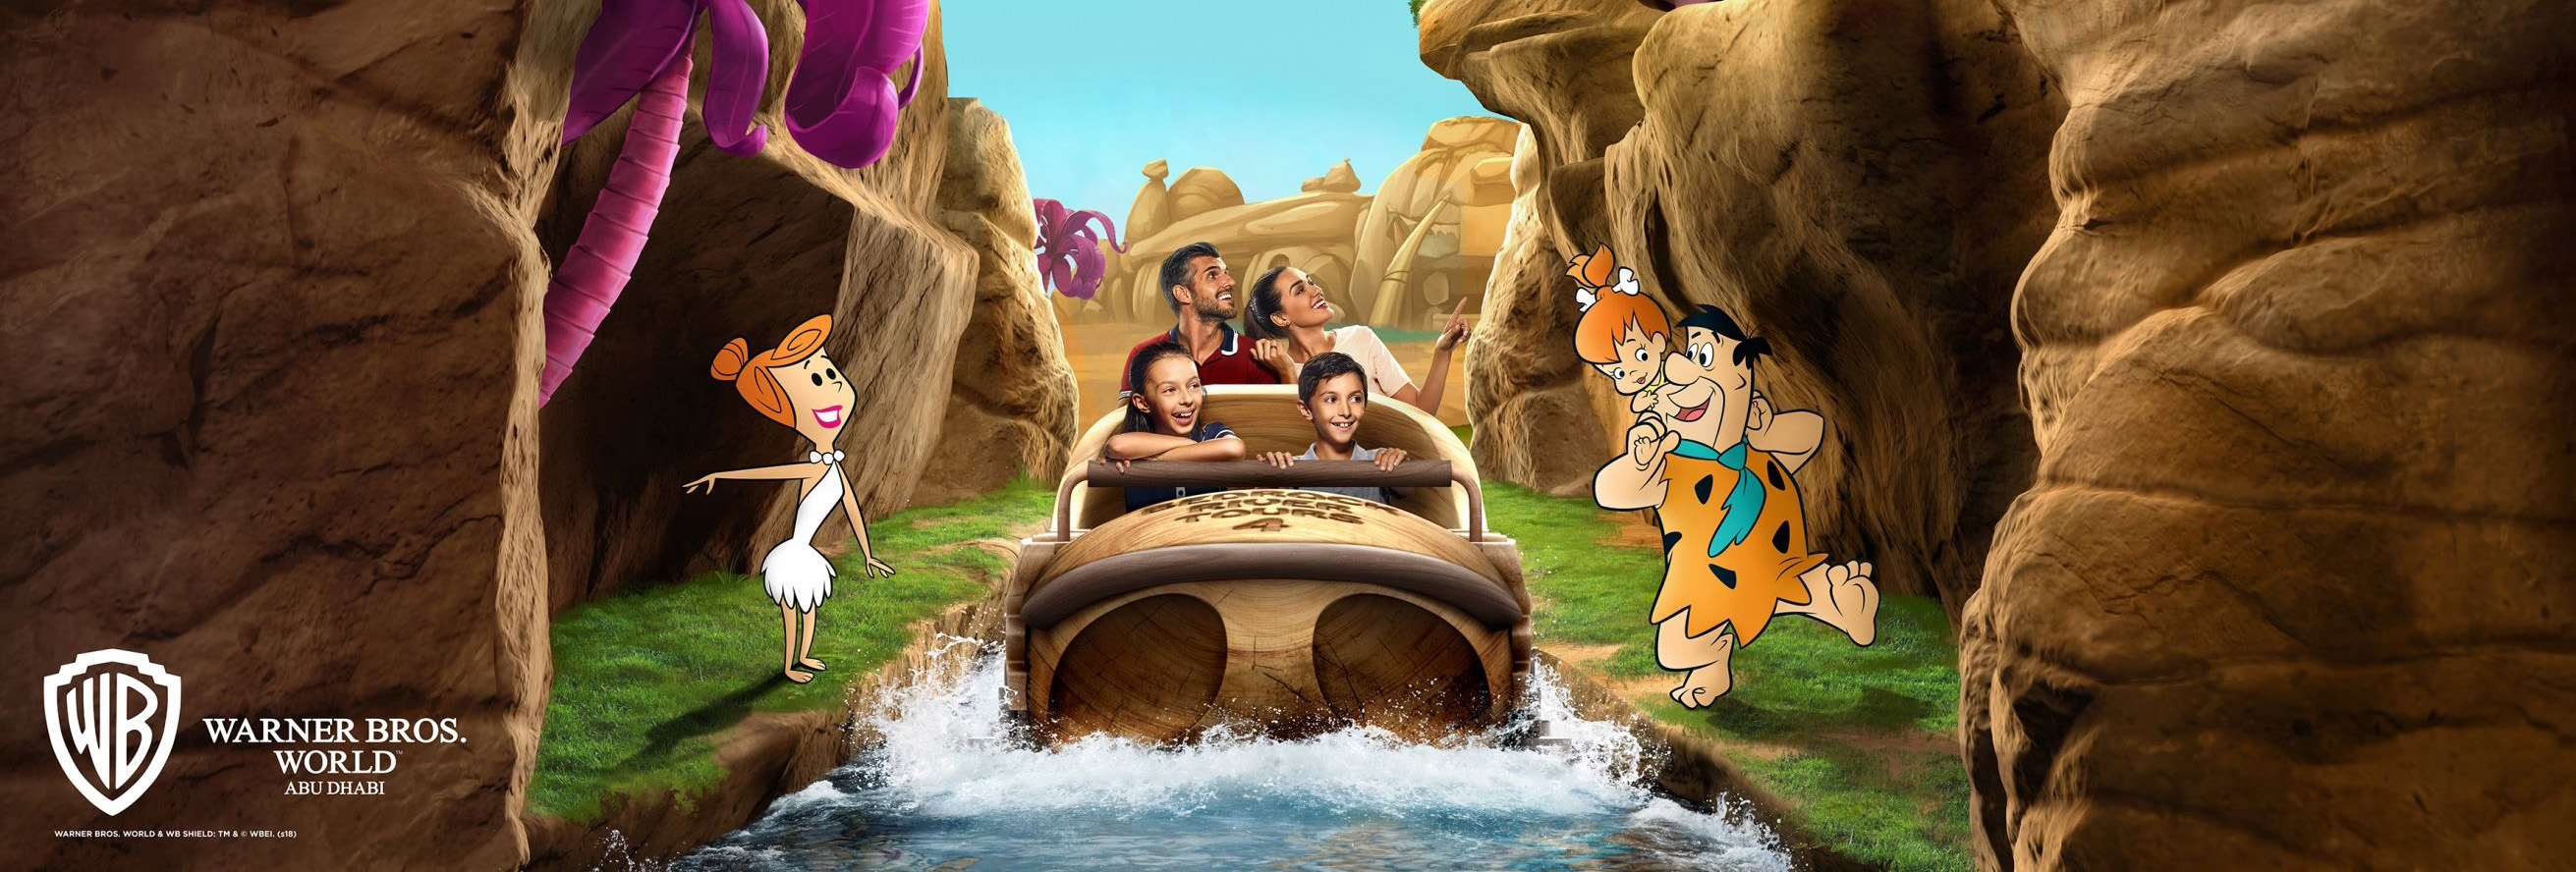 Warner Bros. World™ Abu Dhabi Brings Animation Favorites to Life in  'Bedrock' an